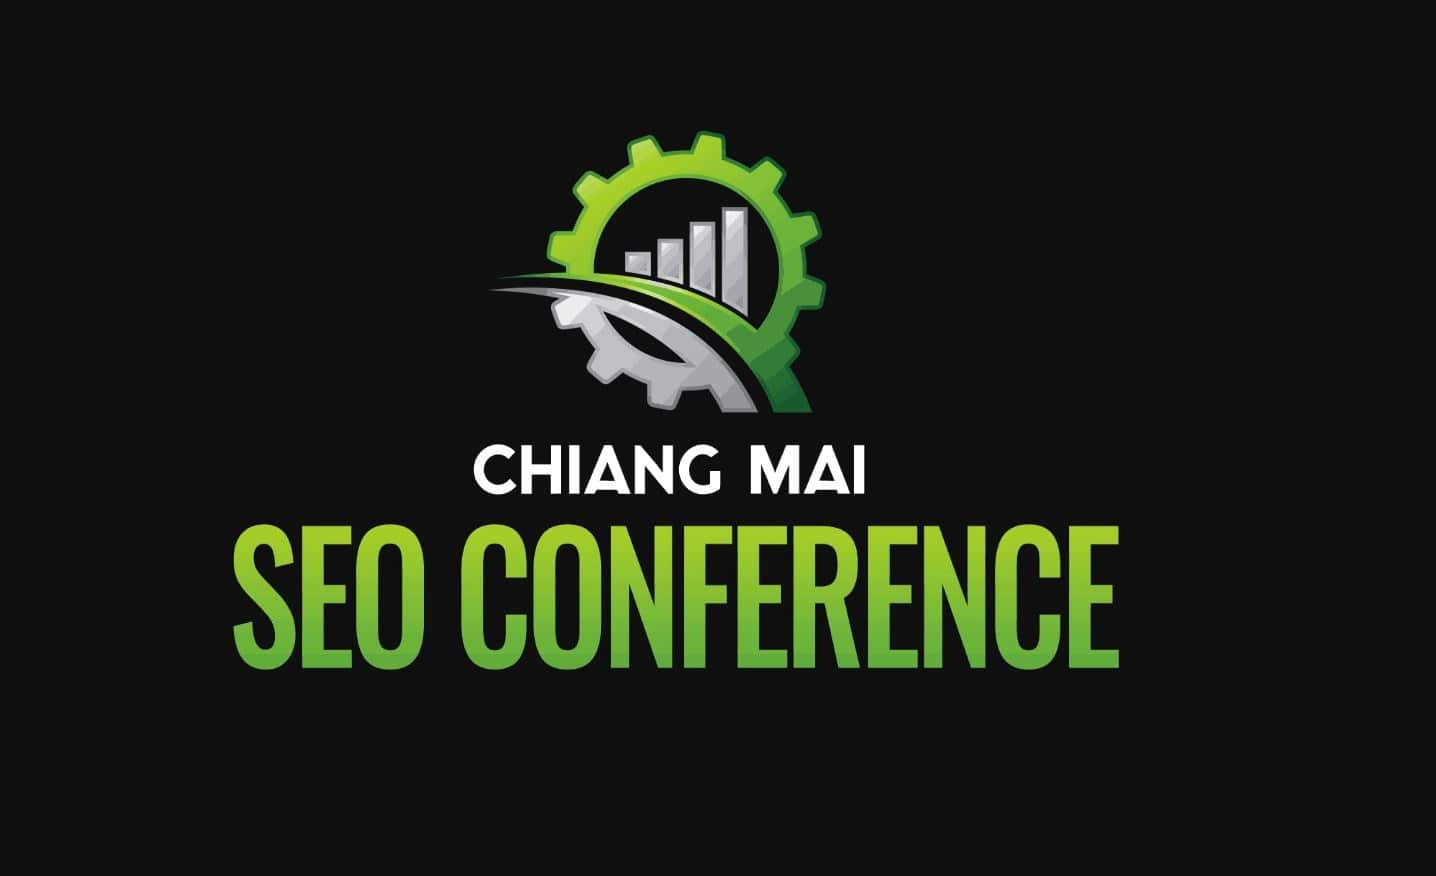 Chiang Mai SEO Conference